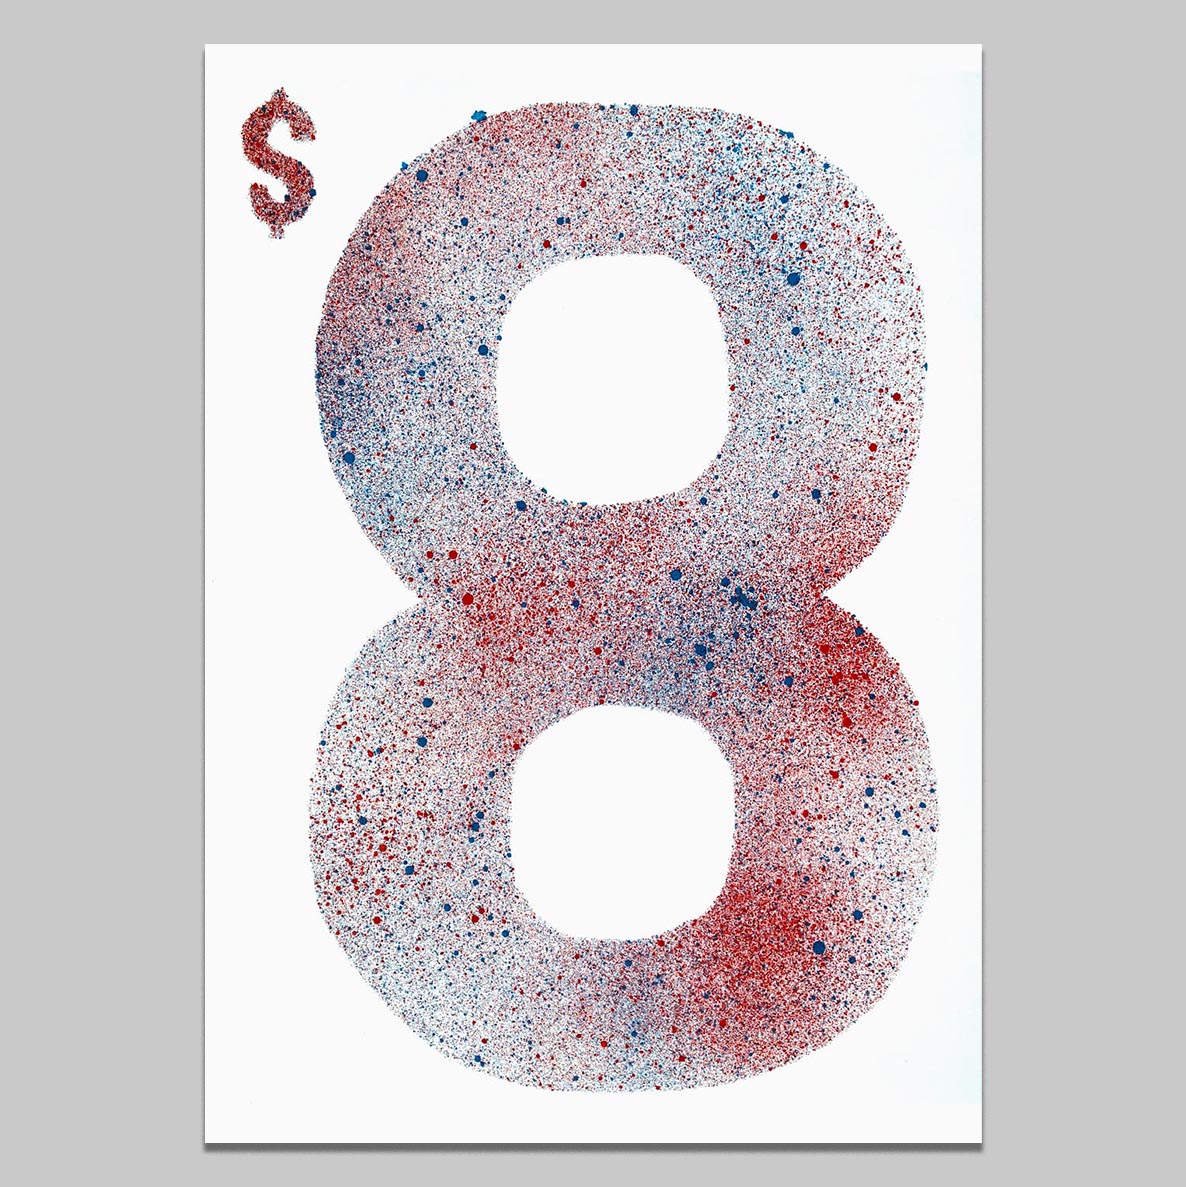 $8 Print